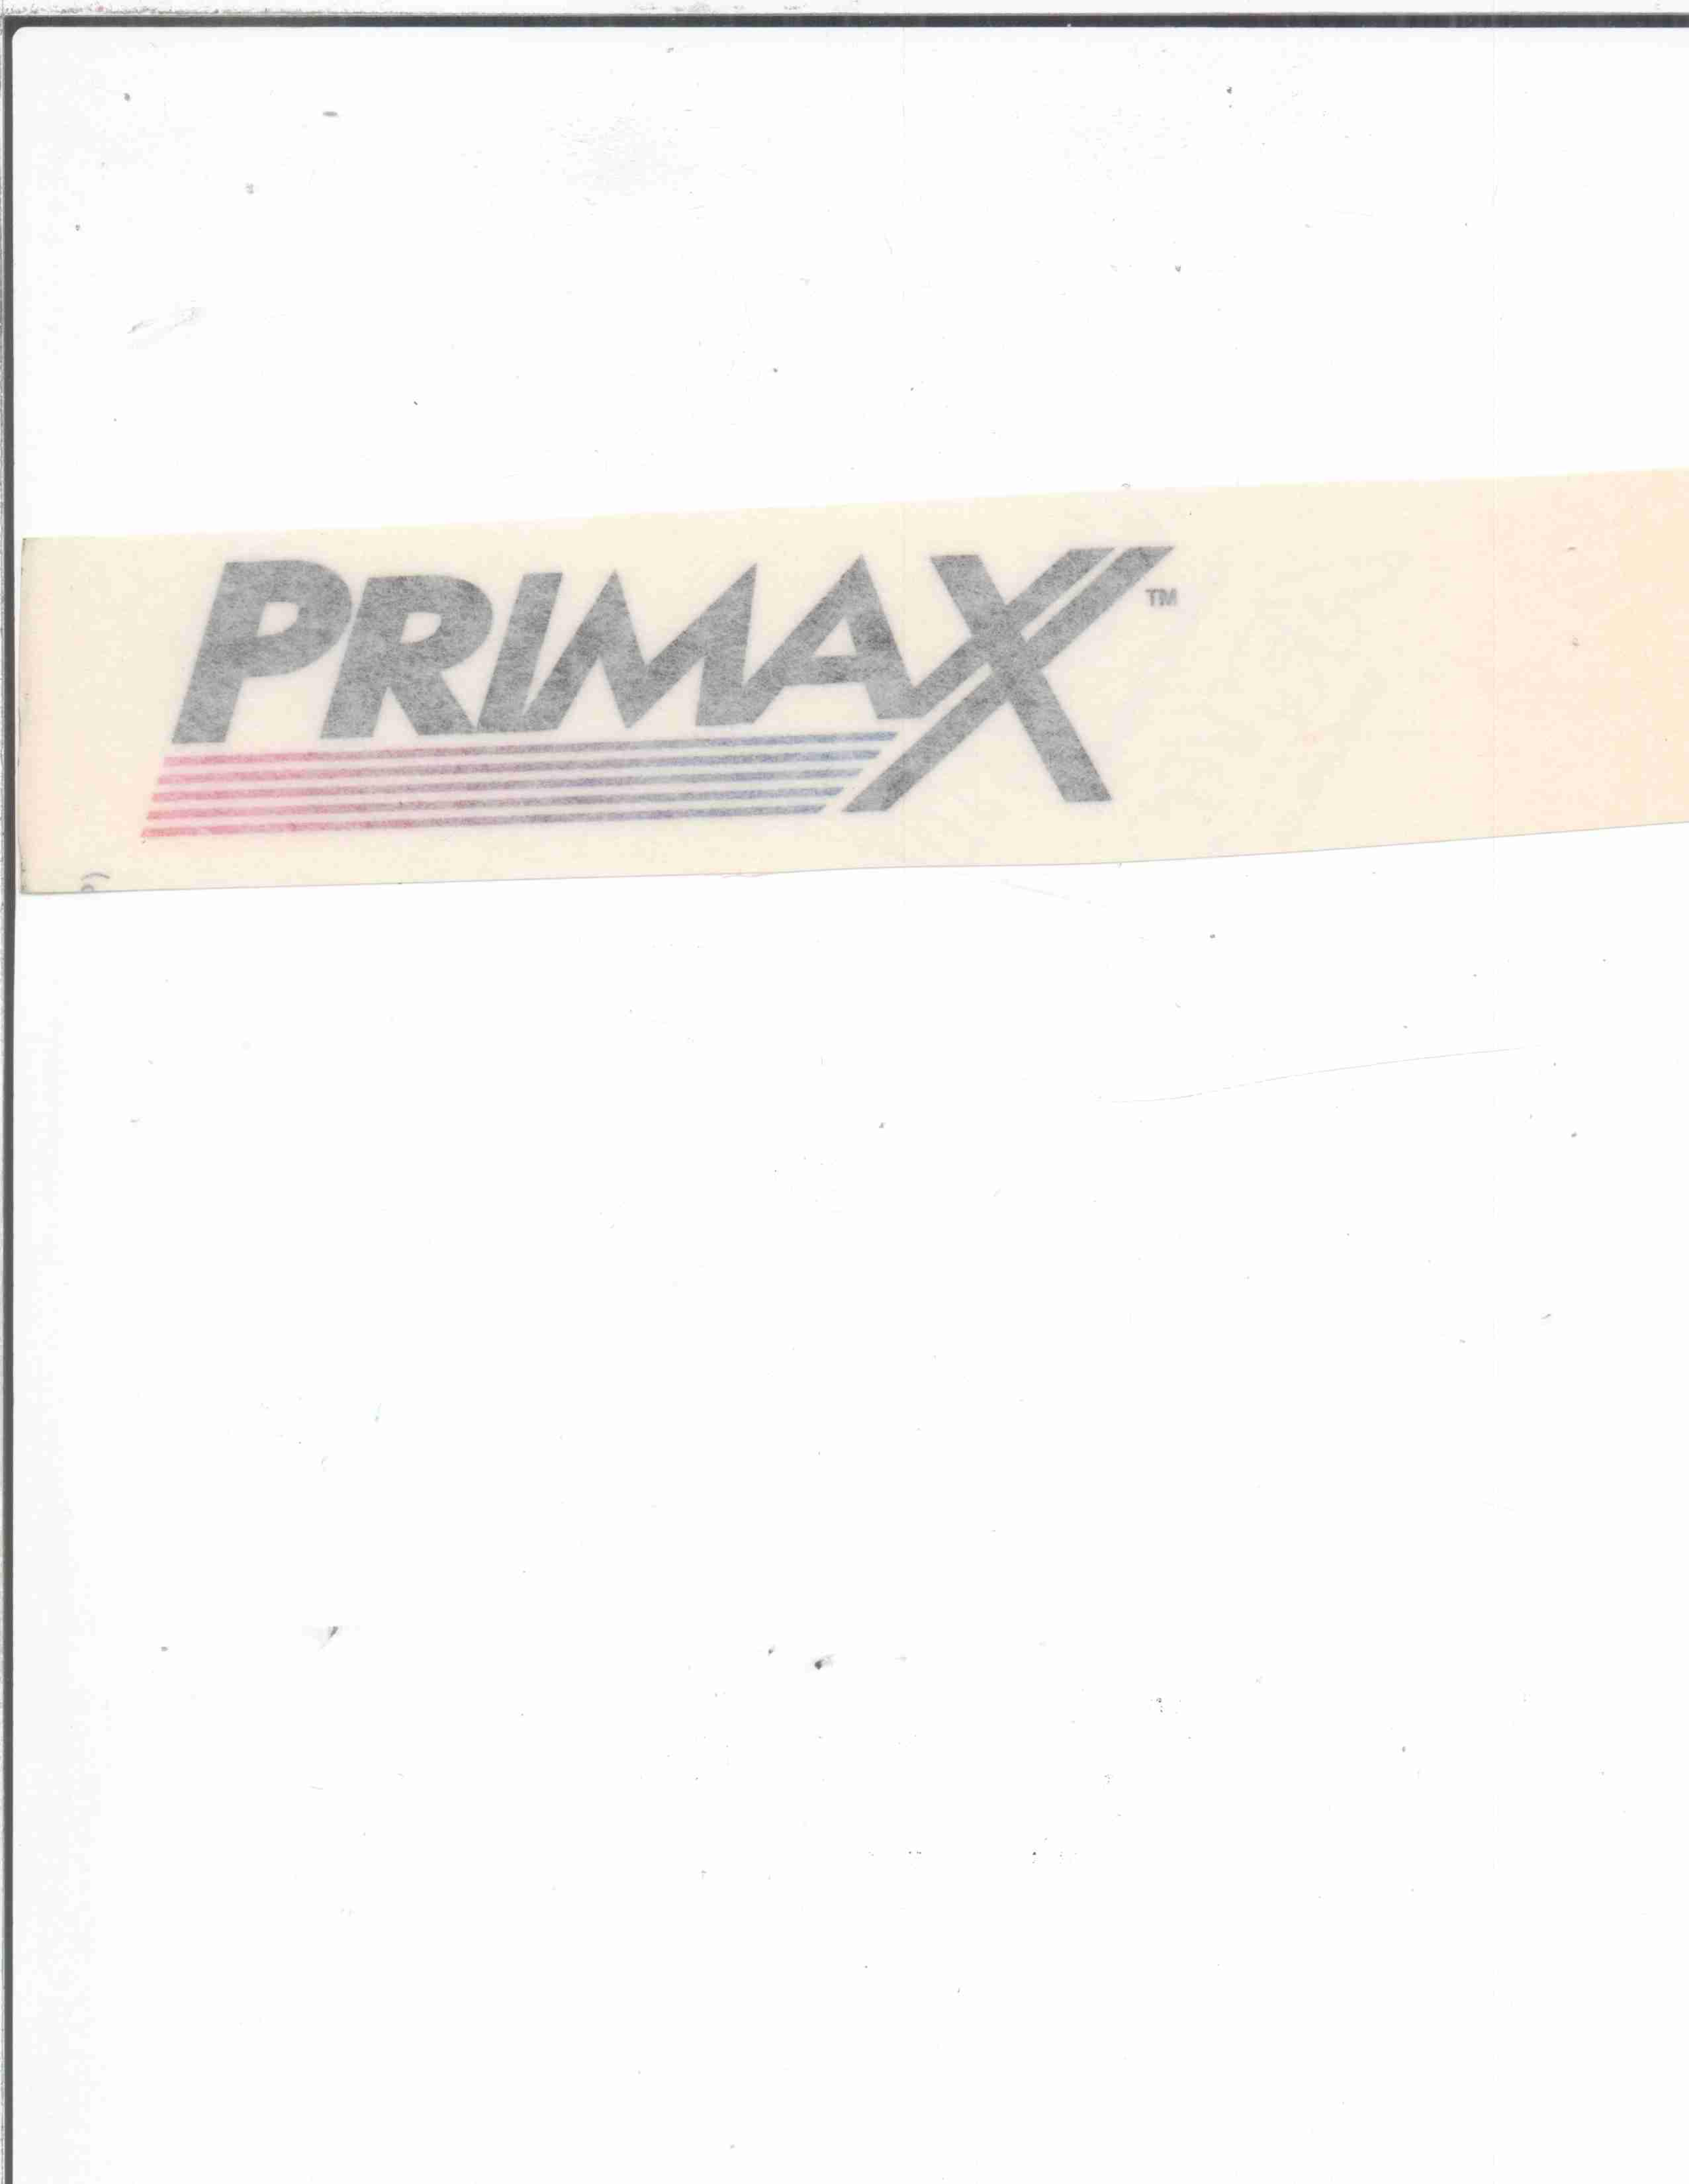  PRIMAXX